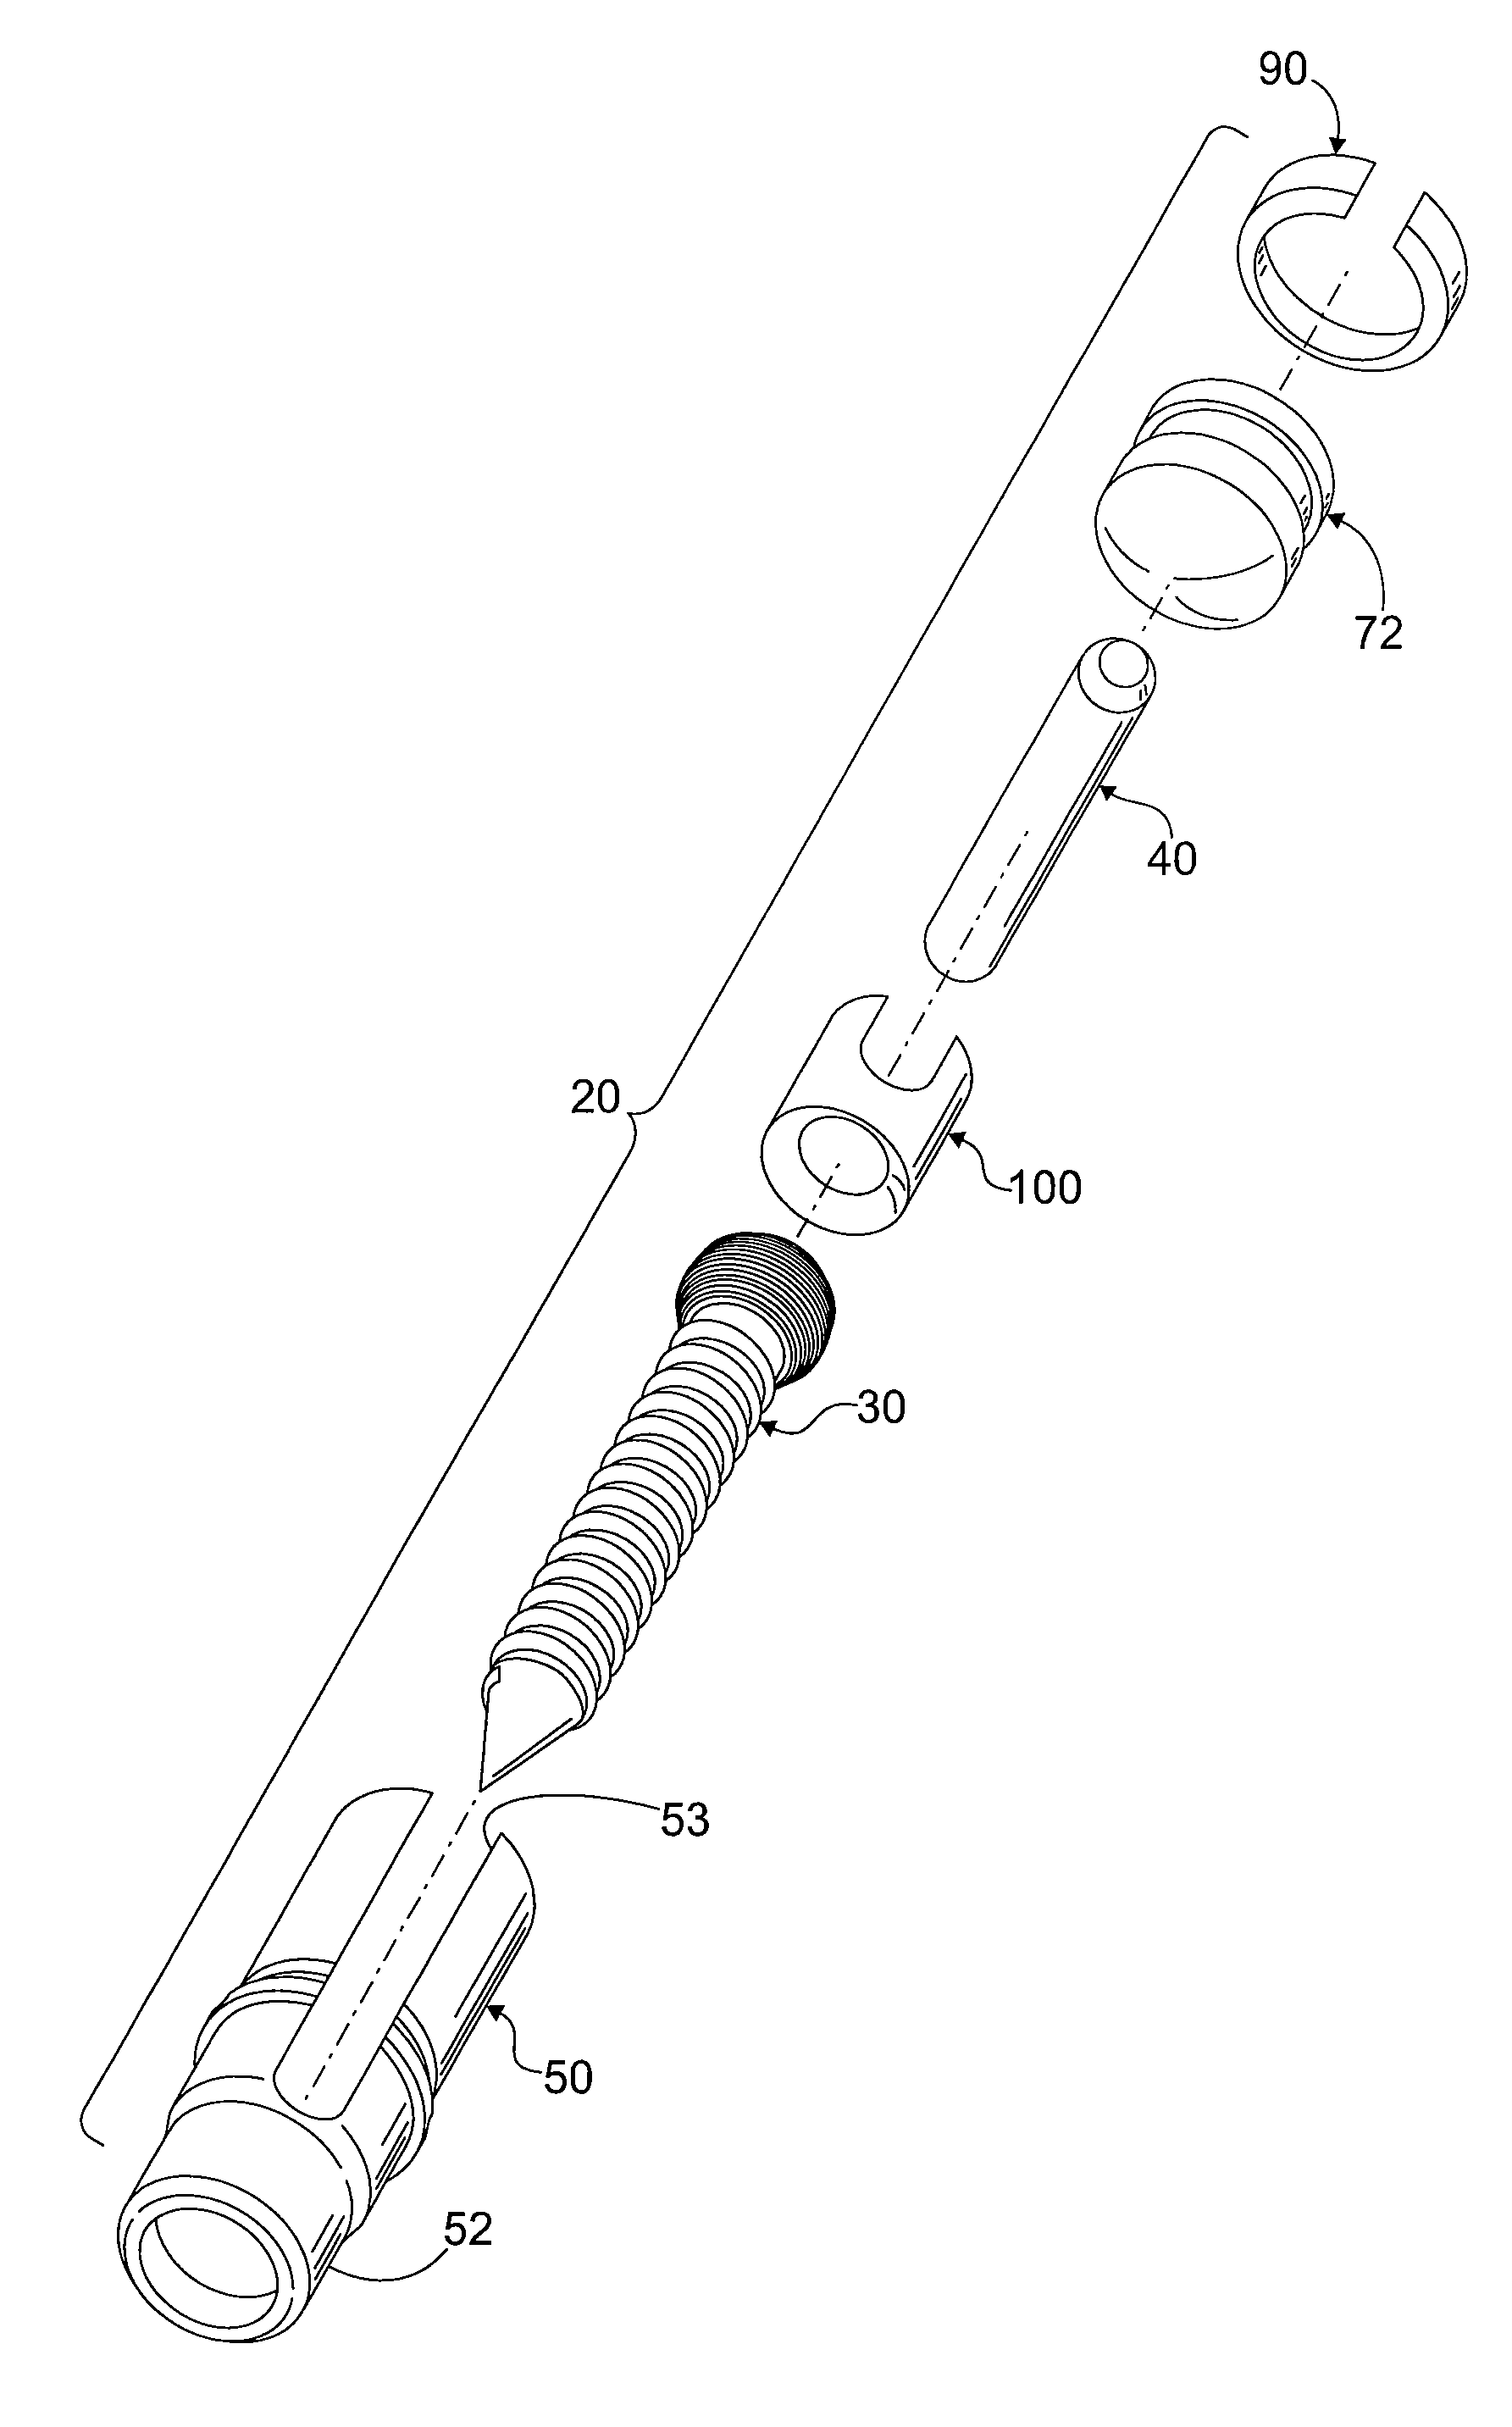 Pedicle screw fixation system